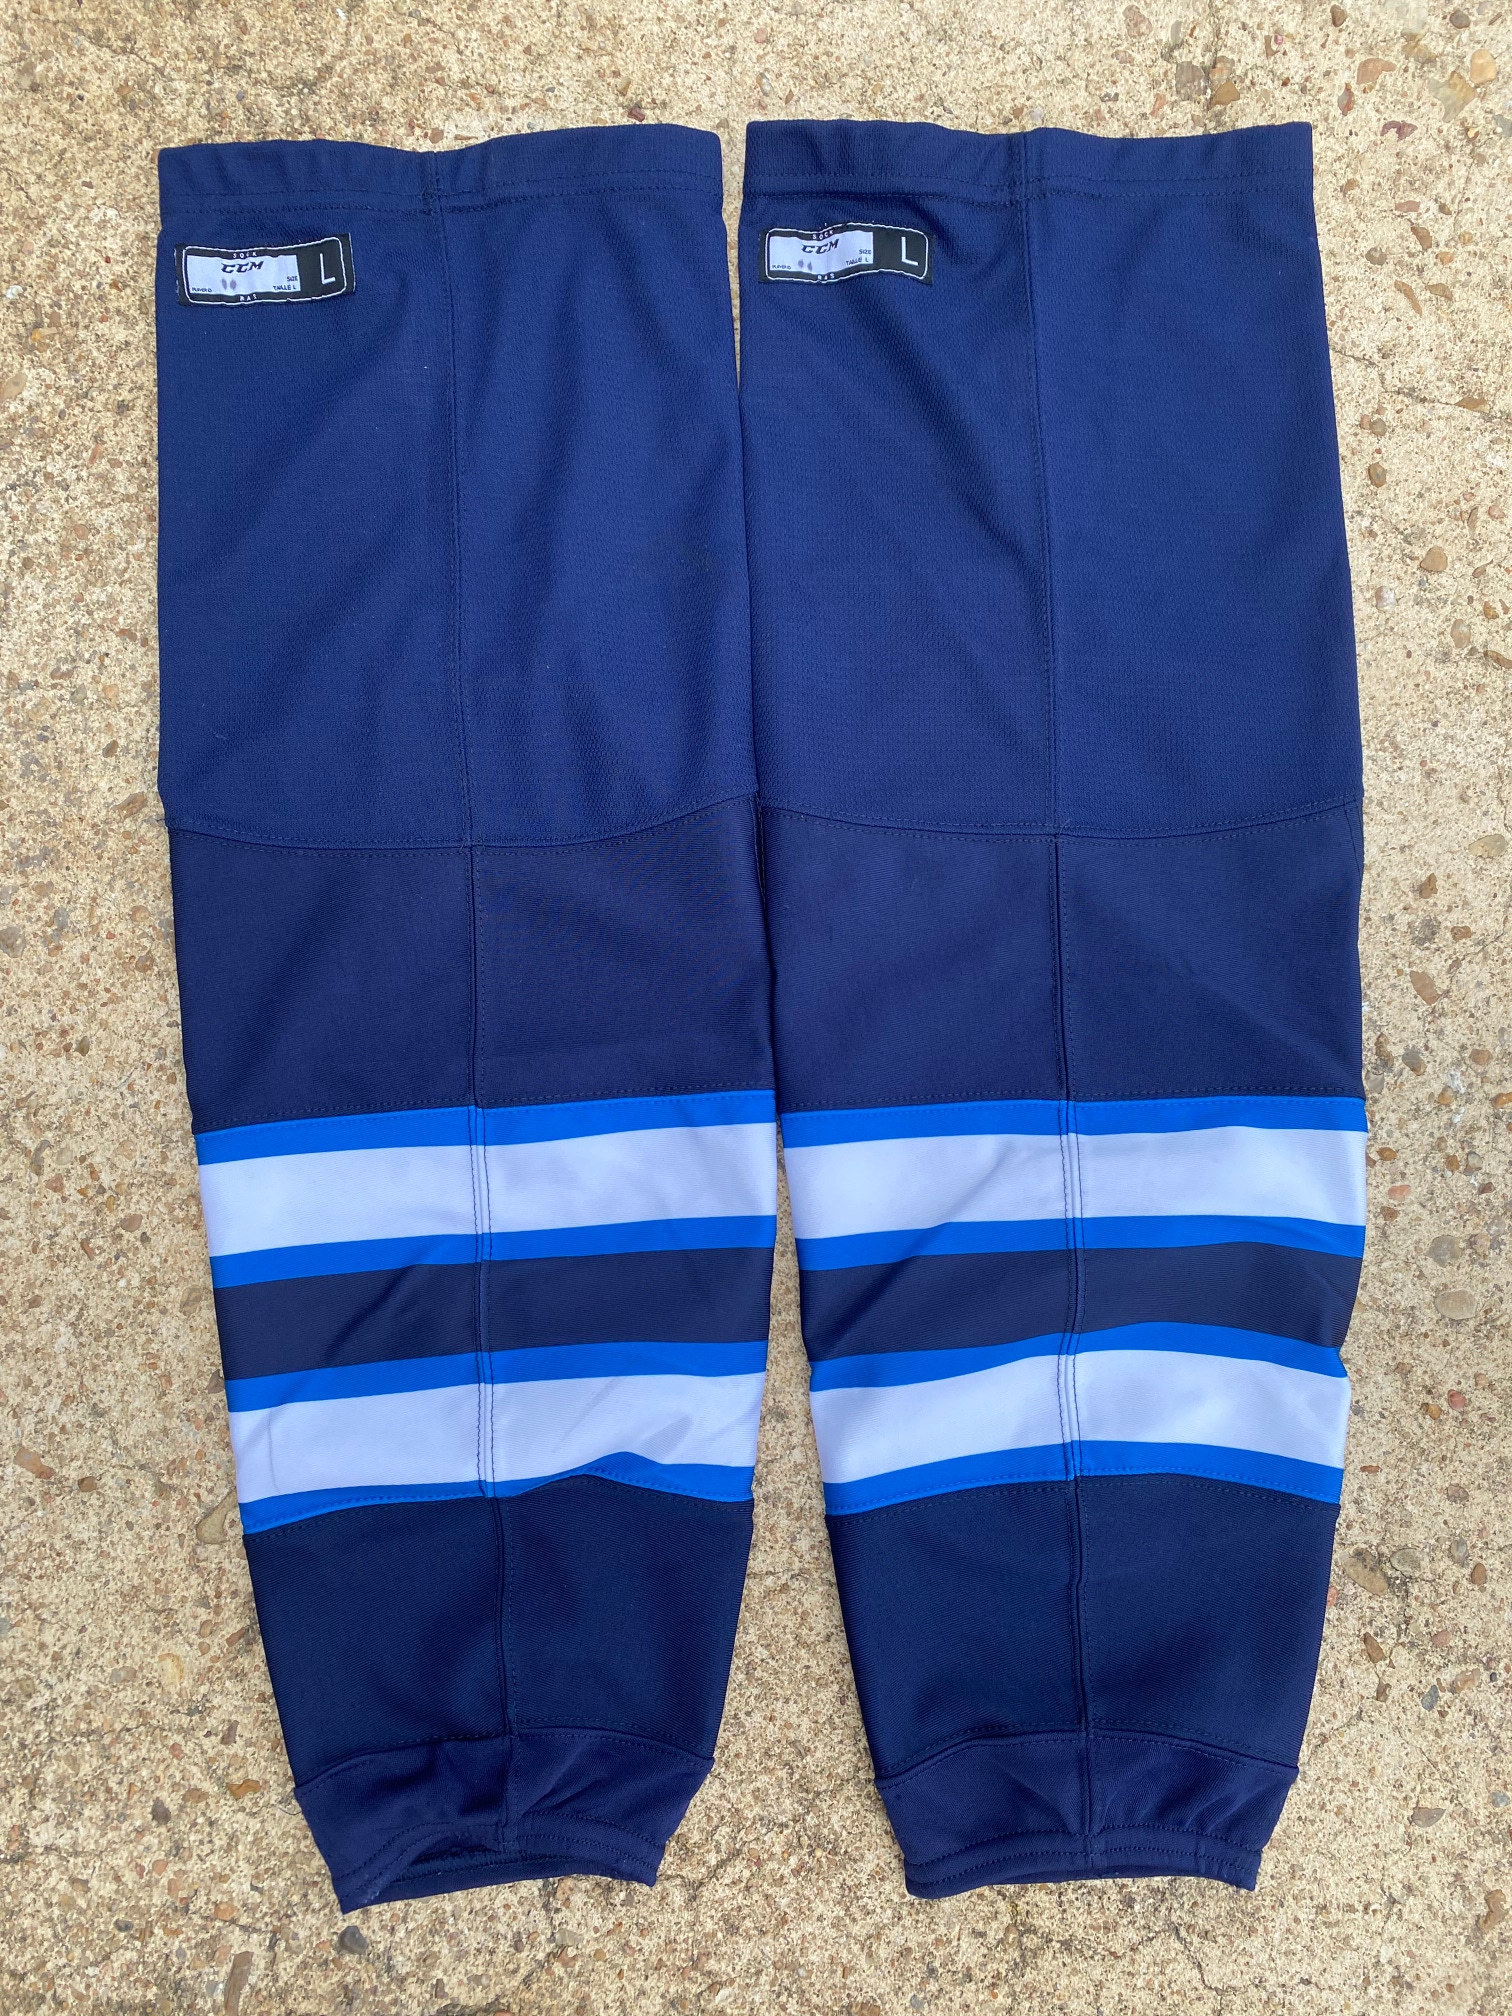 CCM Edge Pro Stock Hockey Shin Pad Socks Cut Proof JETS Navy Blue 8455